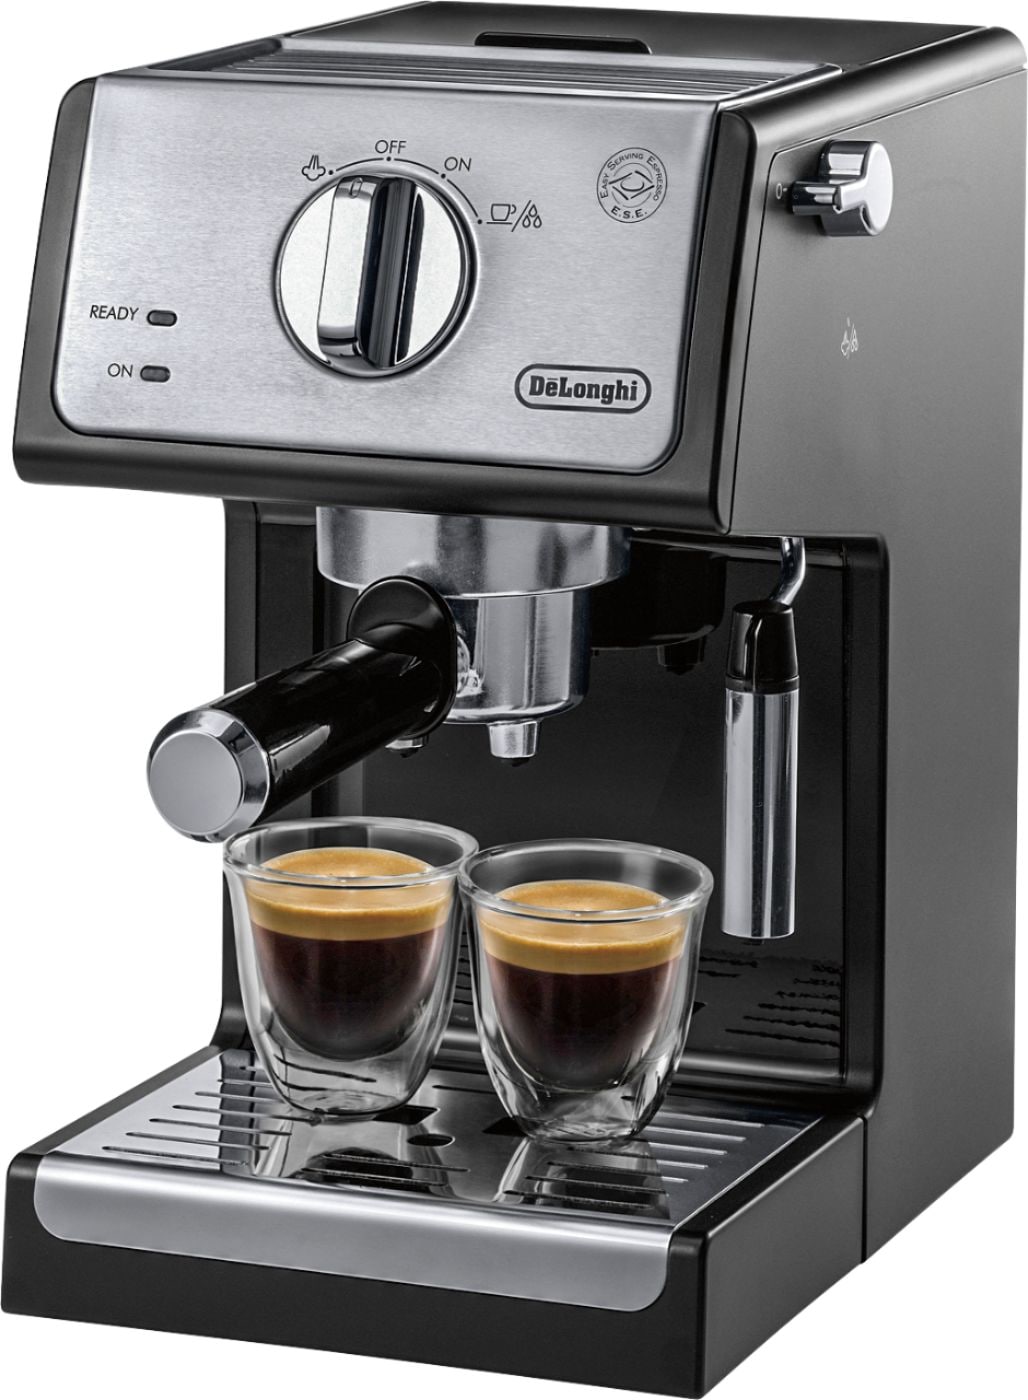 De'Longhi - Espresso Machine with 15 bars of pressure - Black_1